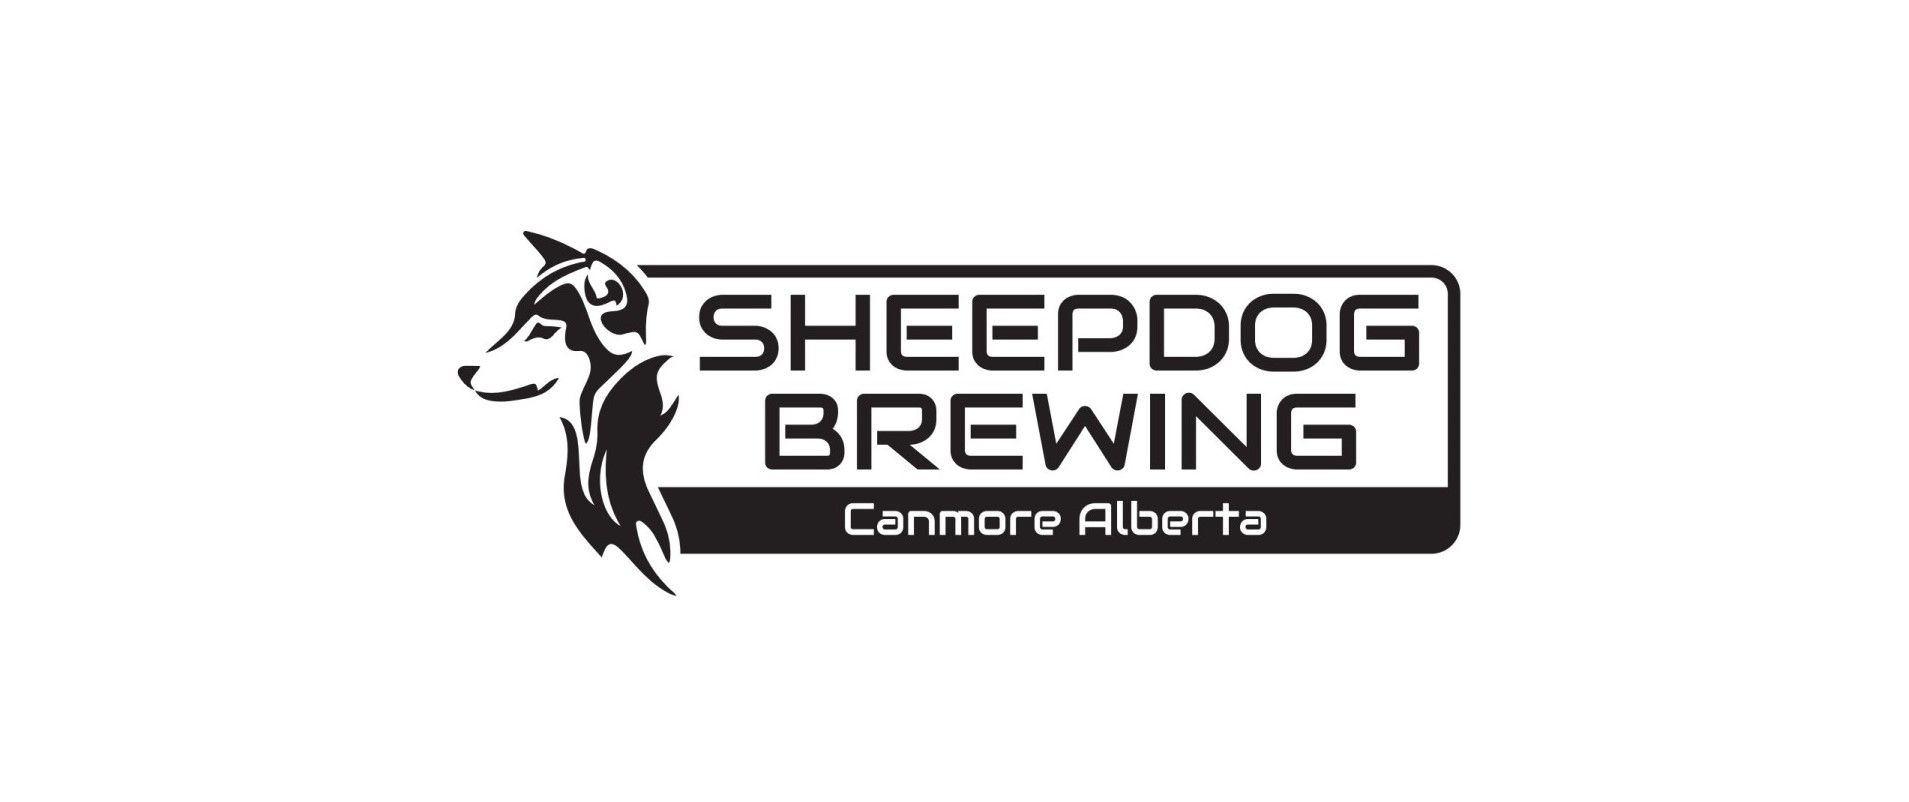 Canadian Rockies Craft Brewery - Sheepdog Brewing